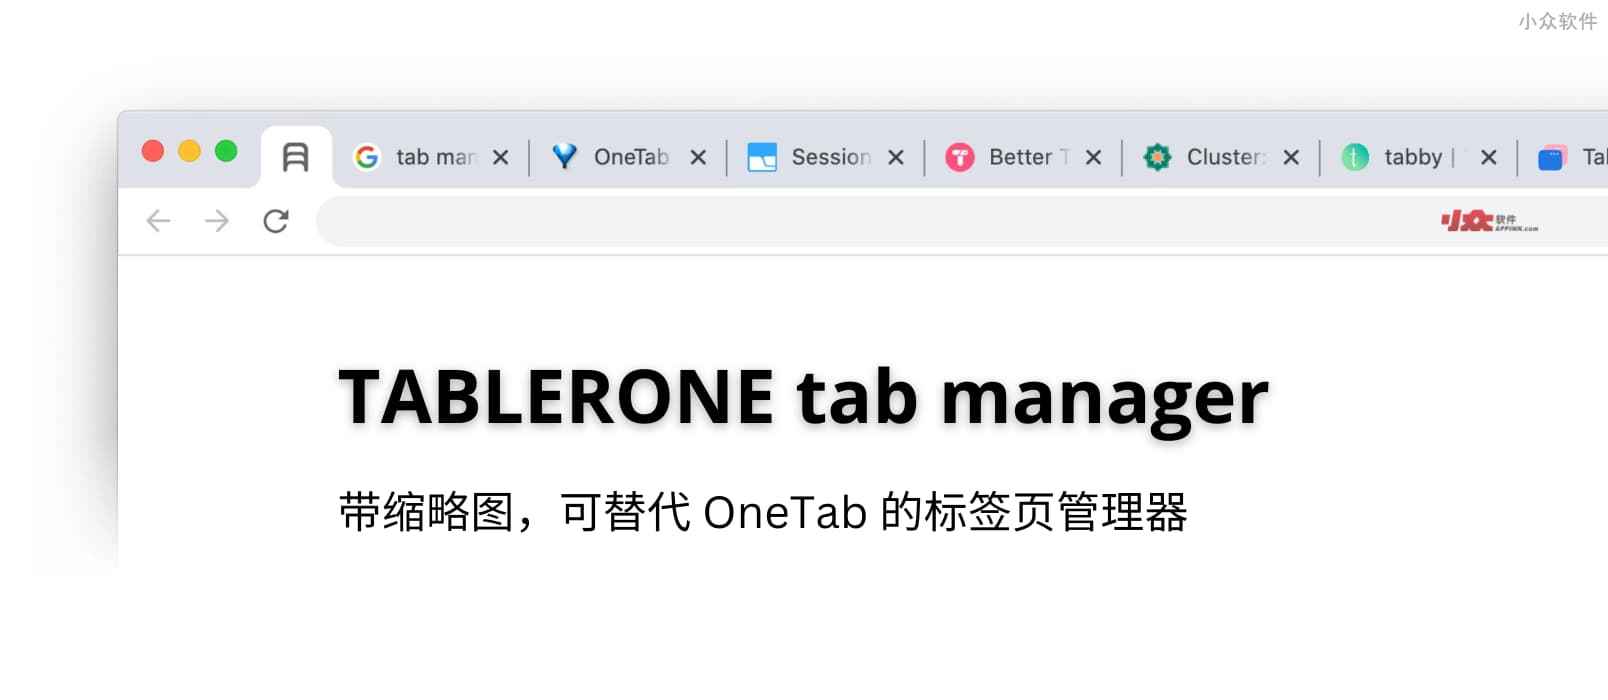 TABLERONE tab manager – 带缩略图，可替代 OneTab 的标签页管理器[Chrome]